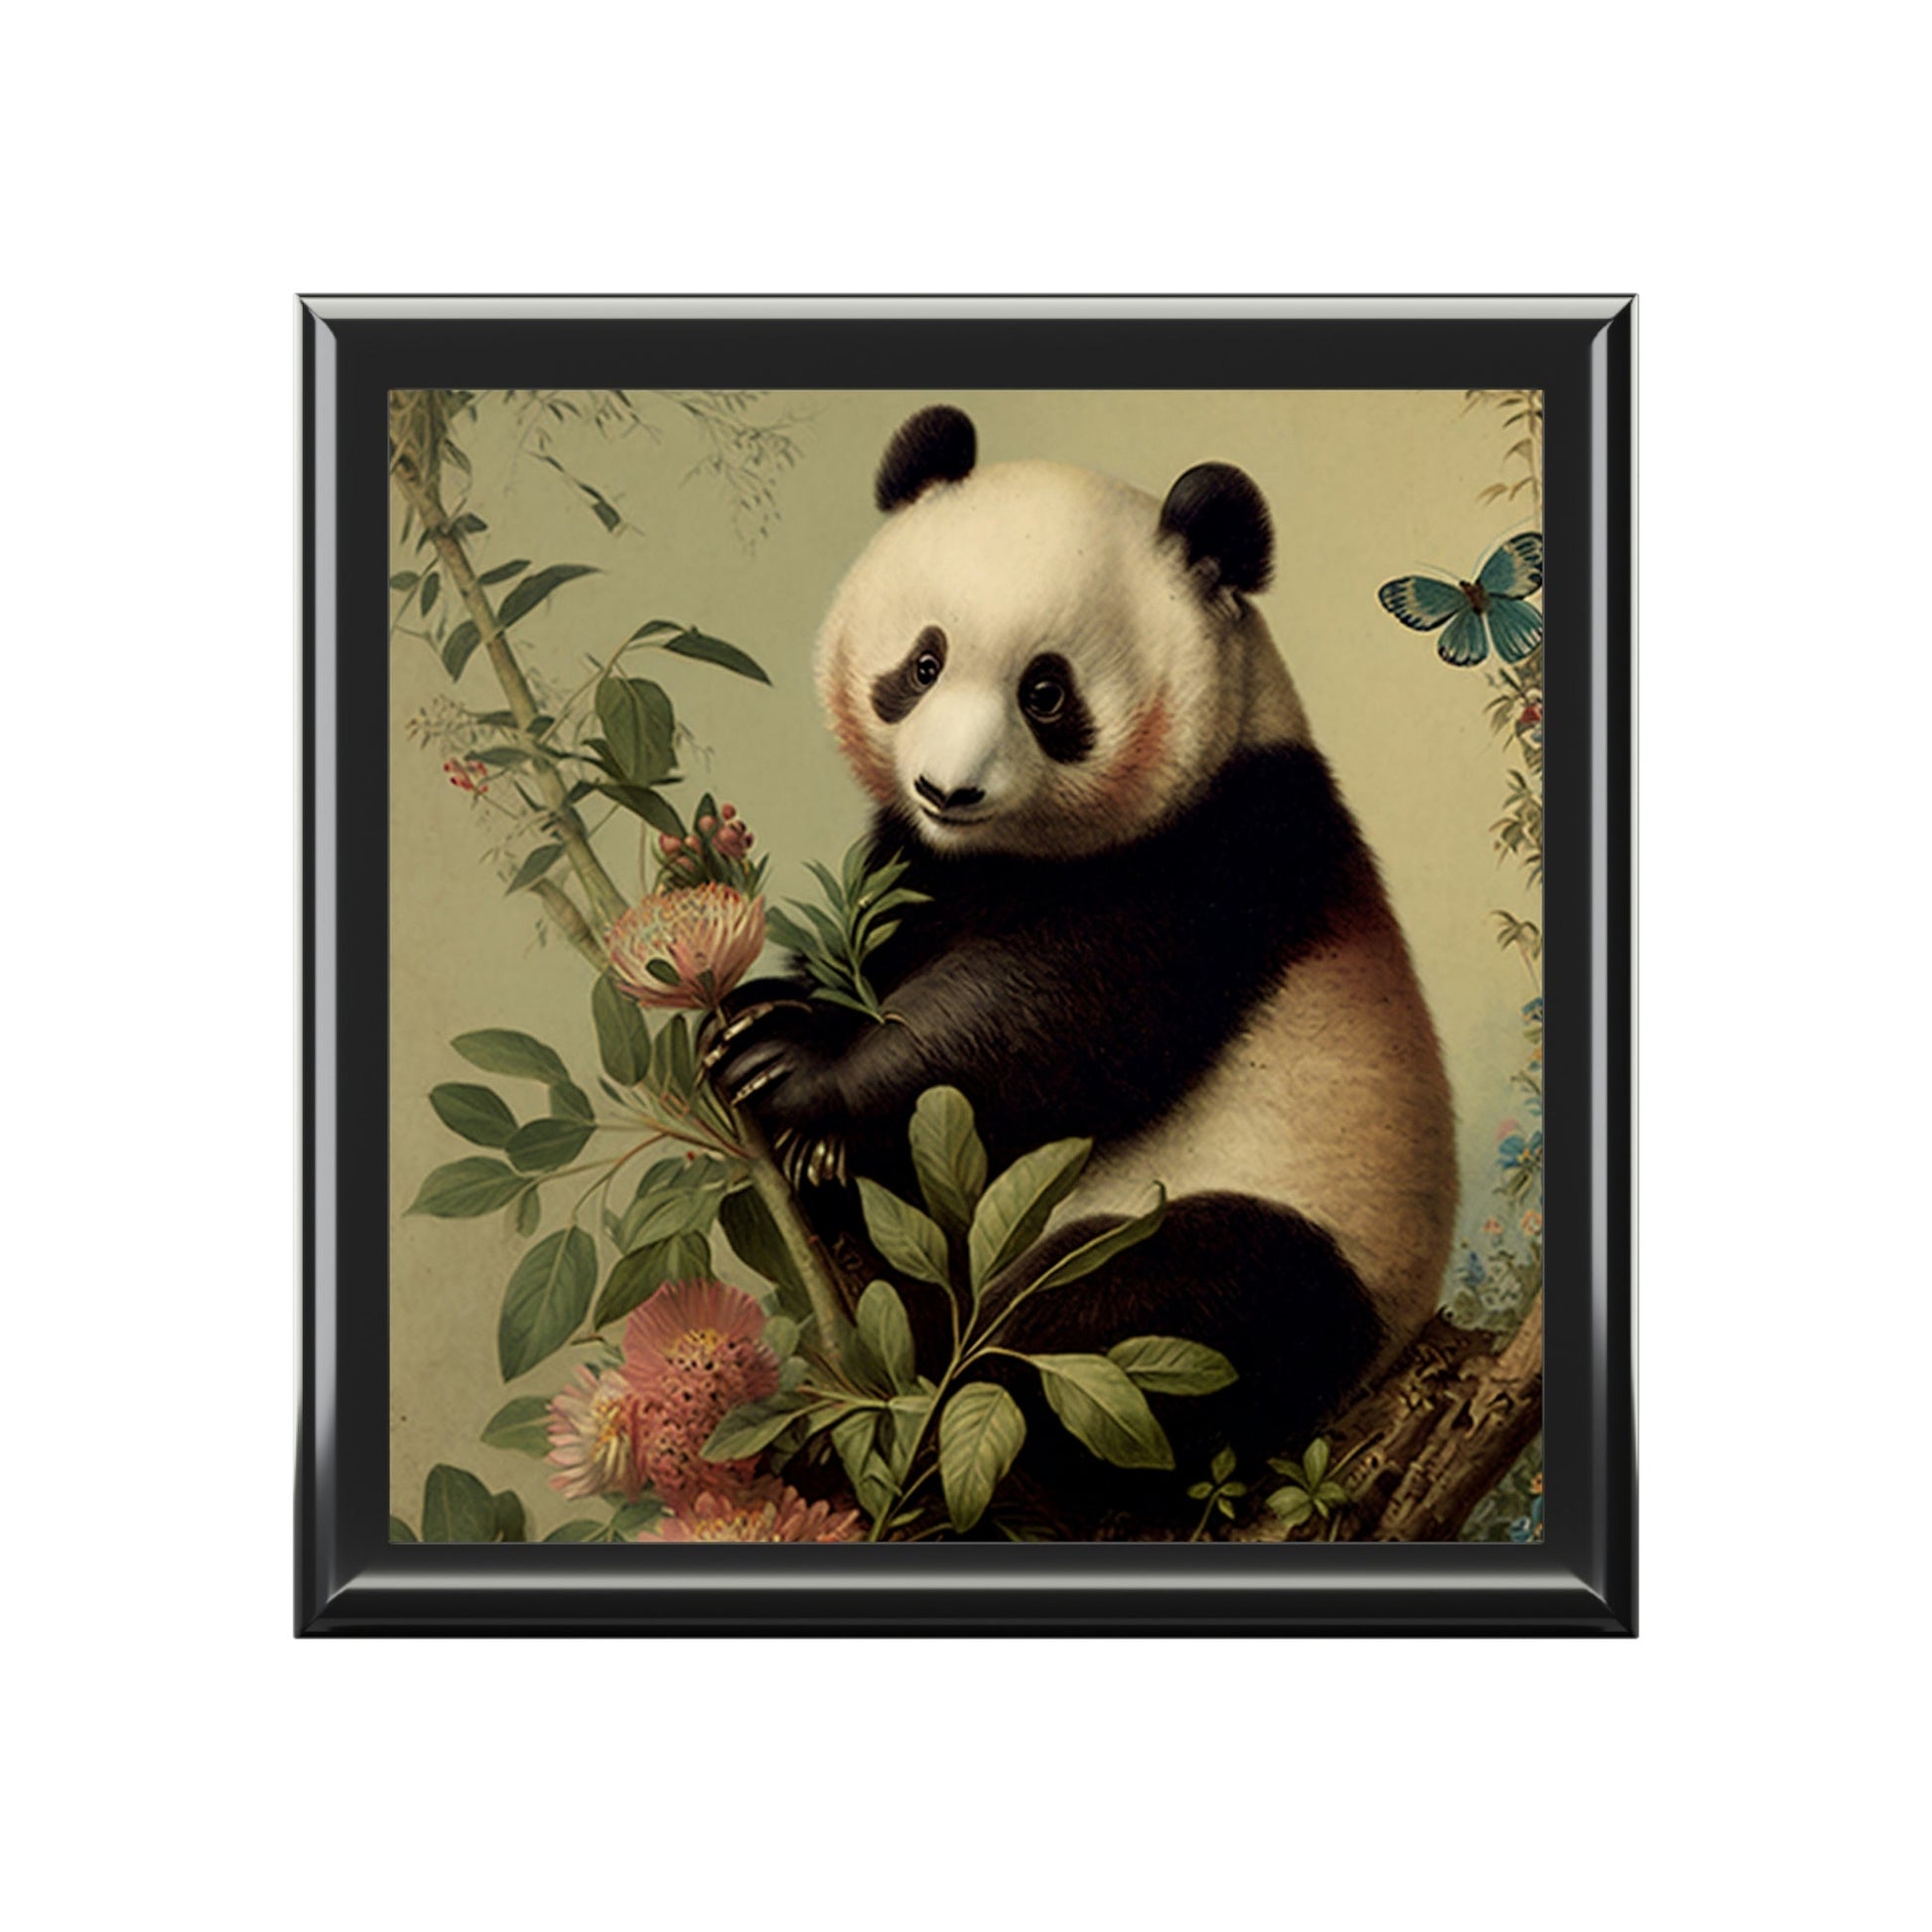 Vintage Panda Art Wooden Keepsake Jewelry Box